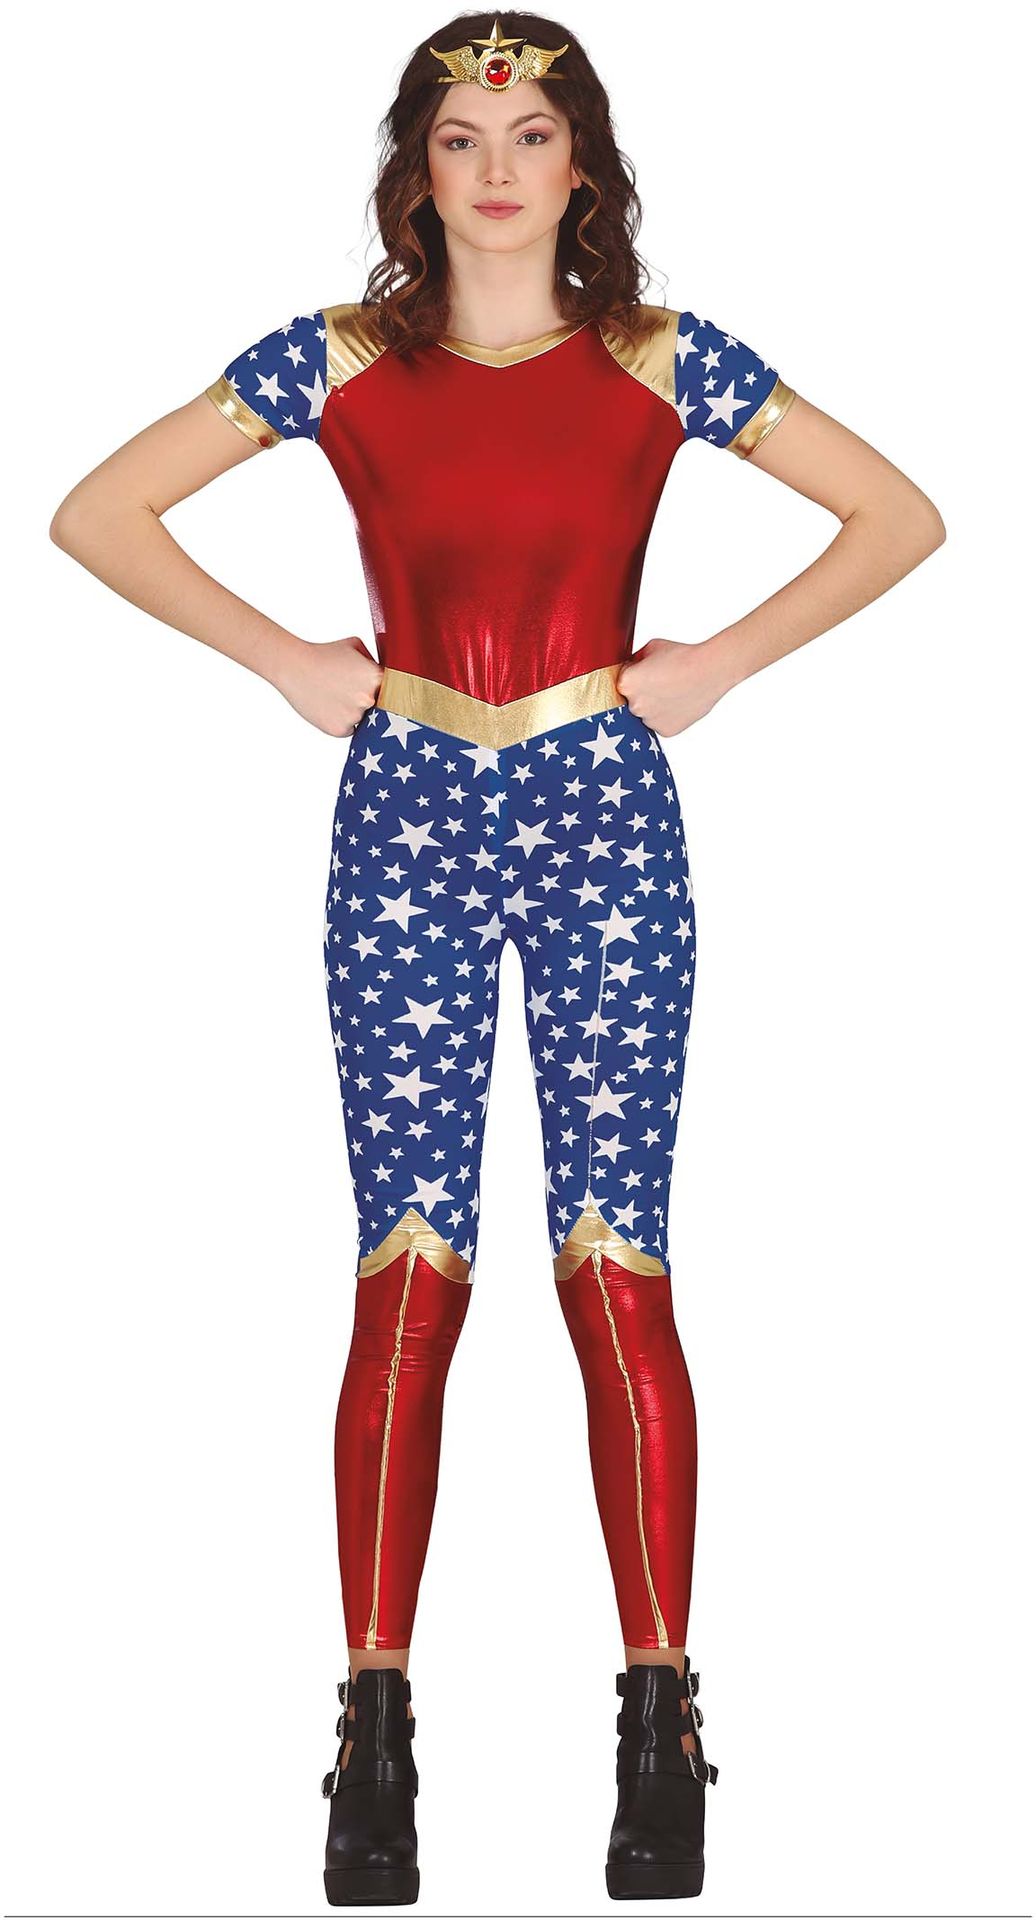 Power superwoman outfit tiener